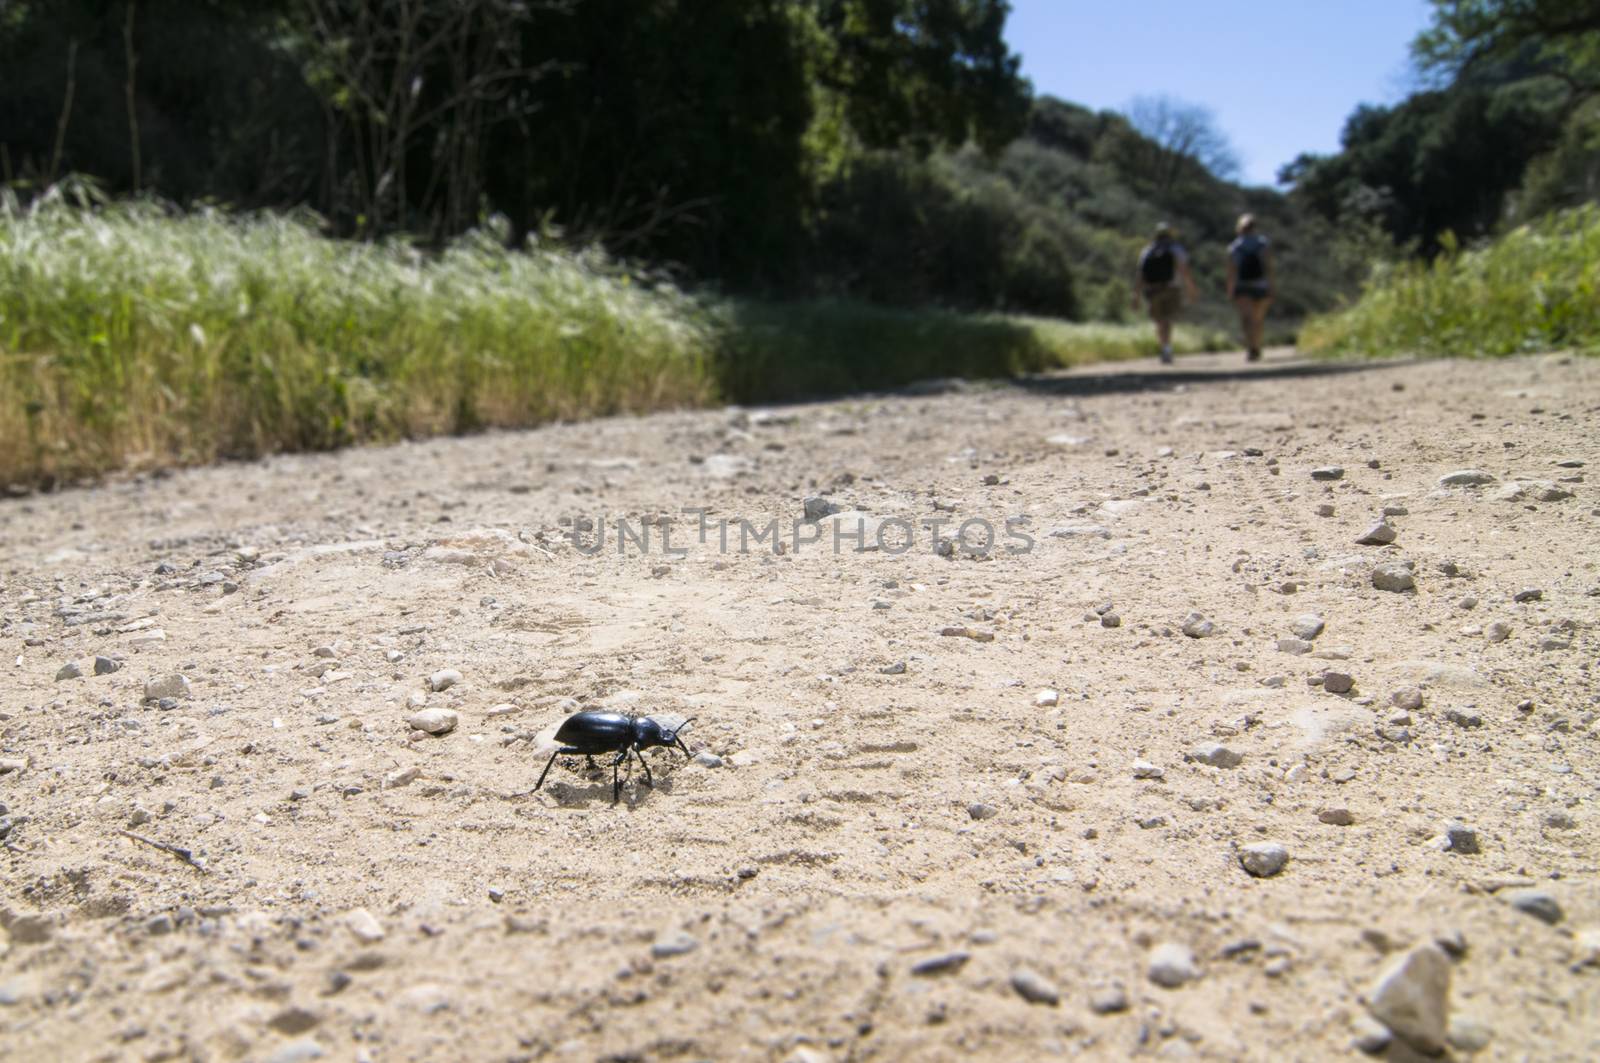 Pinacate beetle (aka Stink Beetle) by Njean